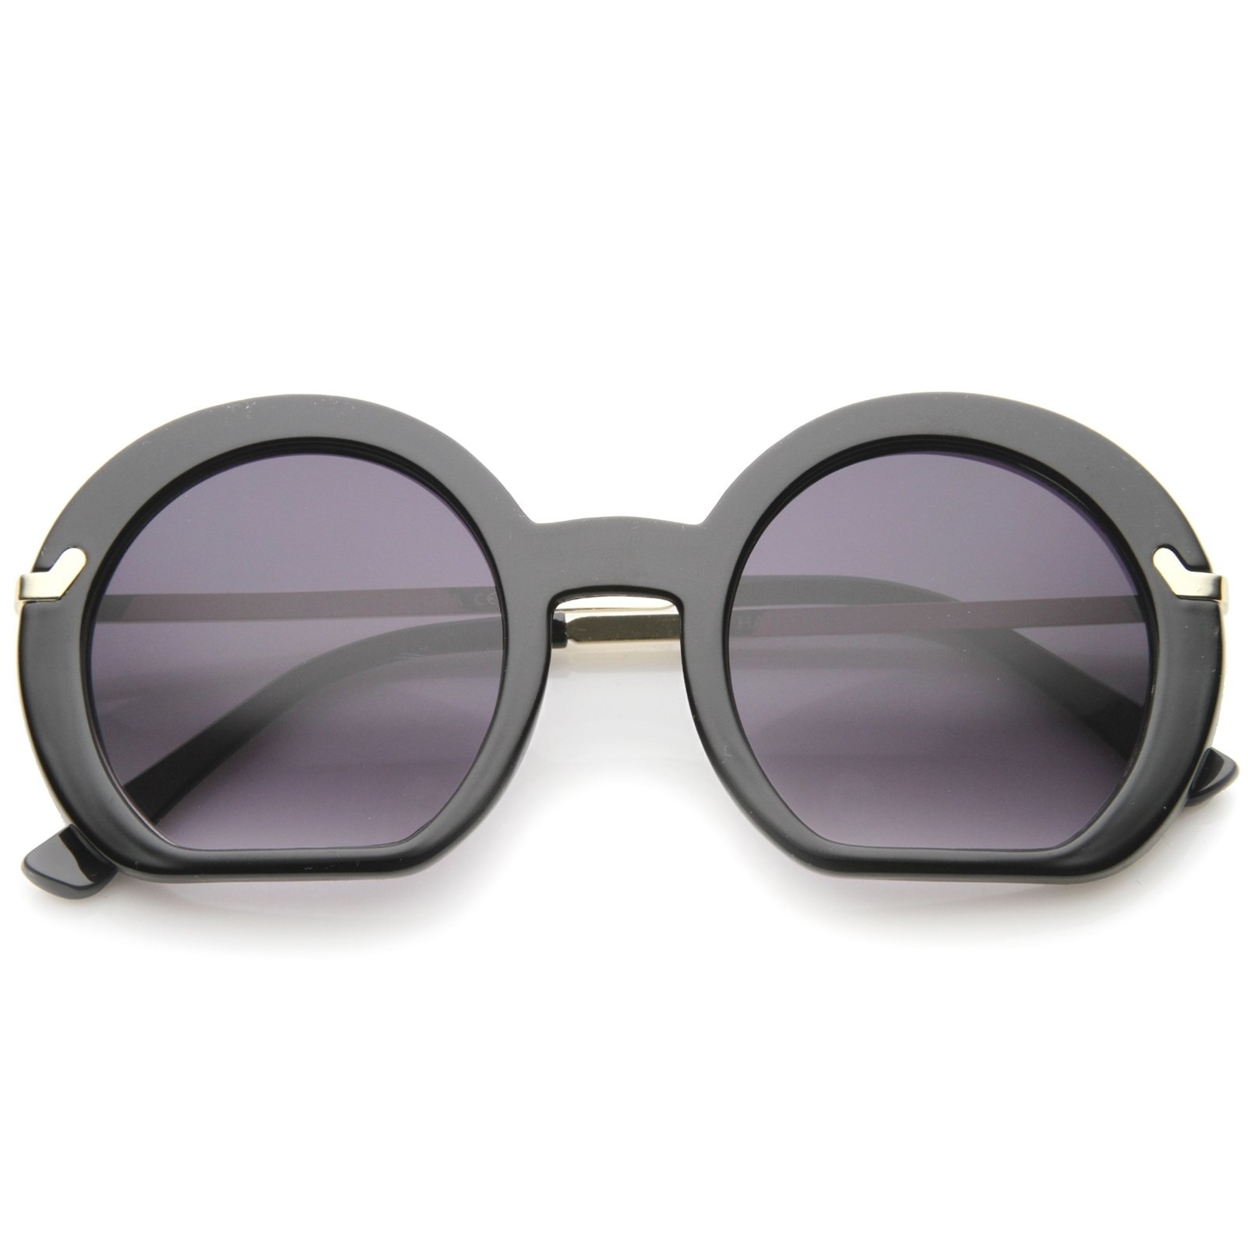 Women's High Fashion Flat Bottom Oversize Round Sunglasses 50mm - Red / Lavender